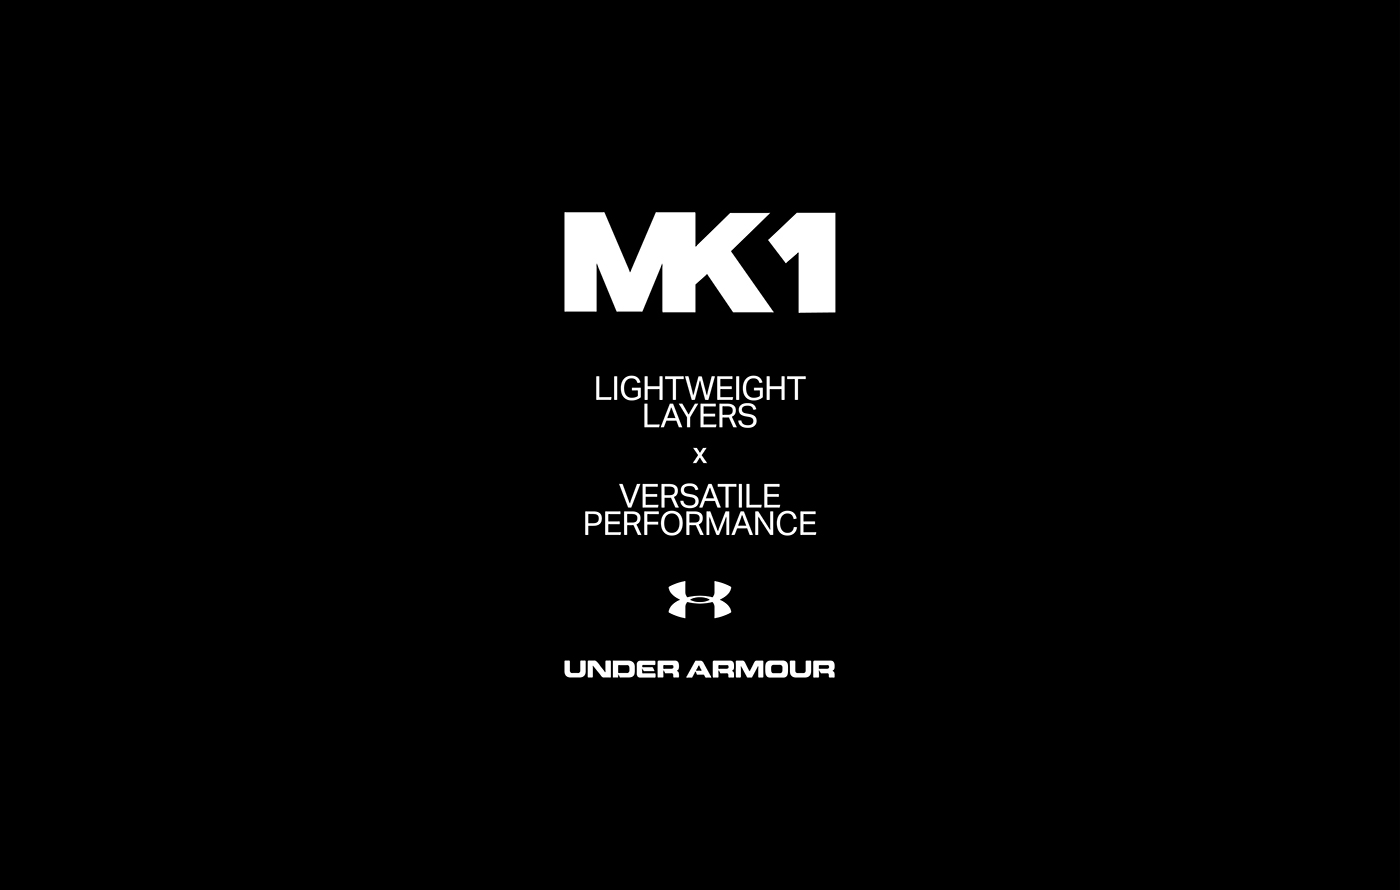 Under Armour mk1 jake galloway SCAD type font Nike adidas kith supreme